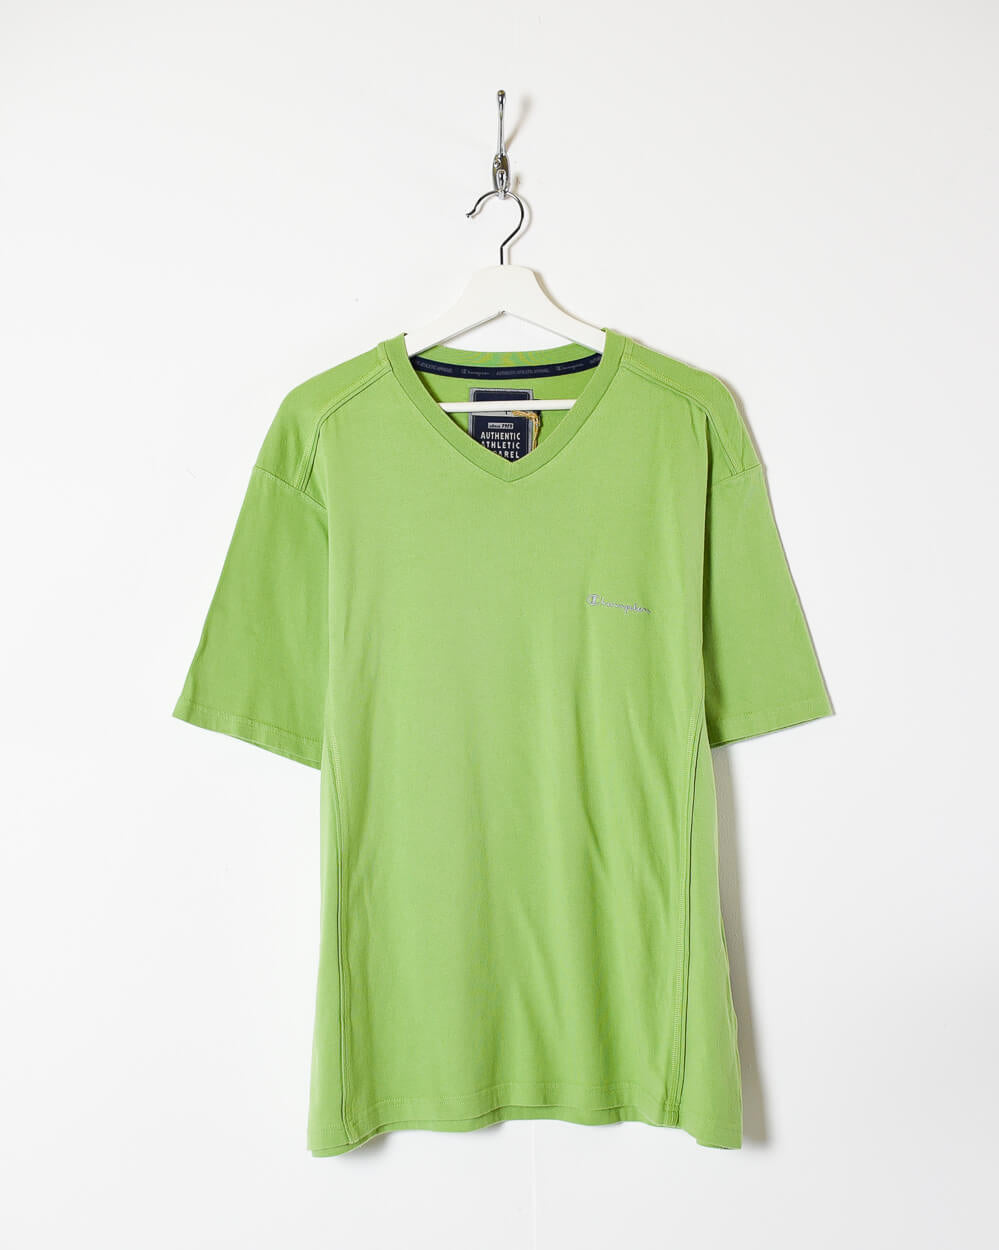 Green Champion T-Shirt - Large